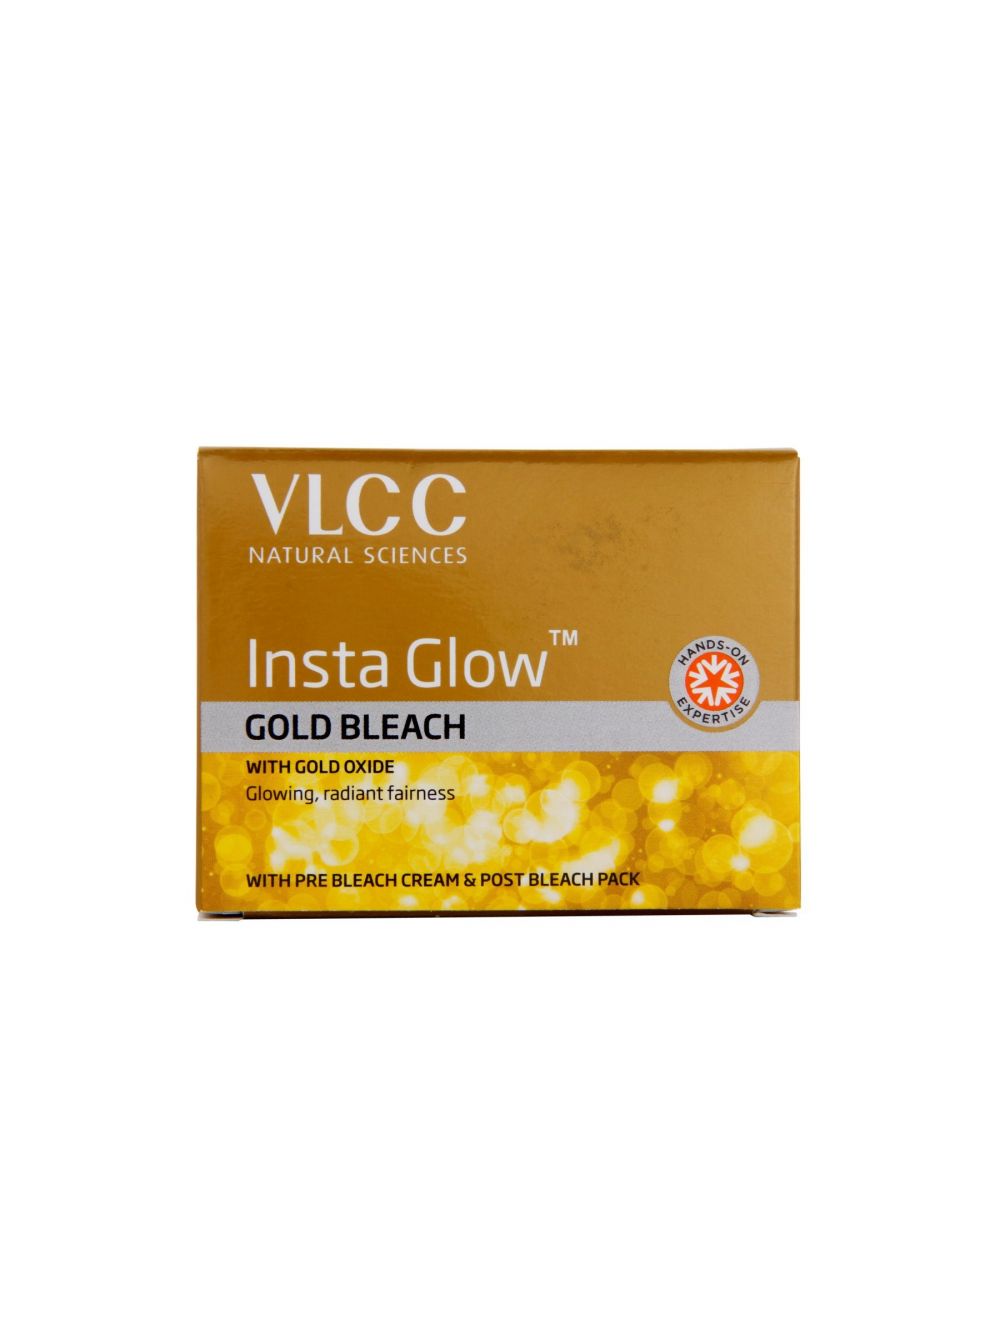 VLCC Insta Glow Gold Bleach (60gm) - Niram